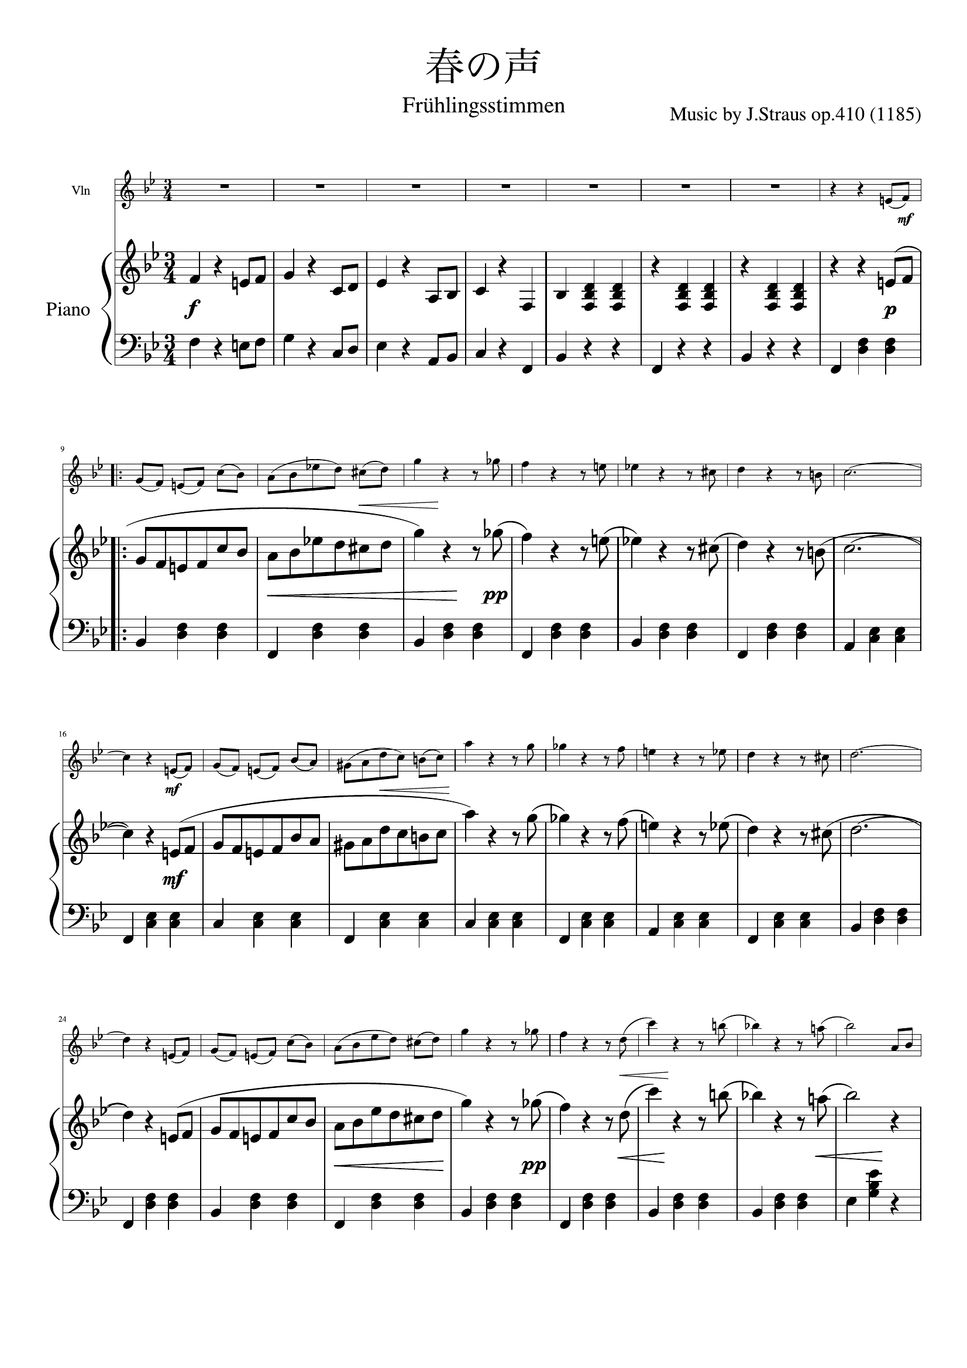 J.Sutraus II - Frühlingsstimmen (Piano&Violin) by pfkaori